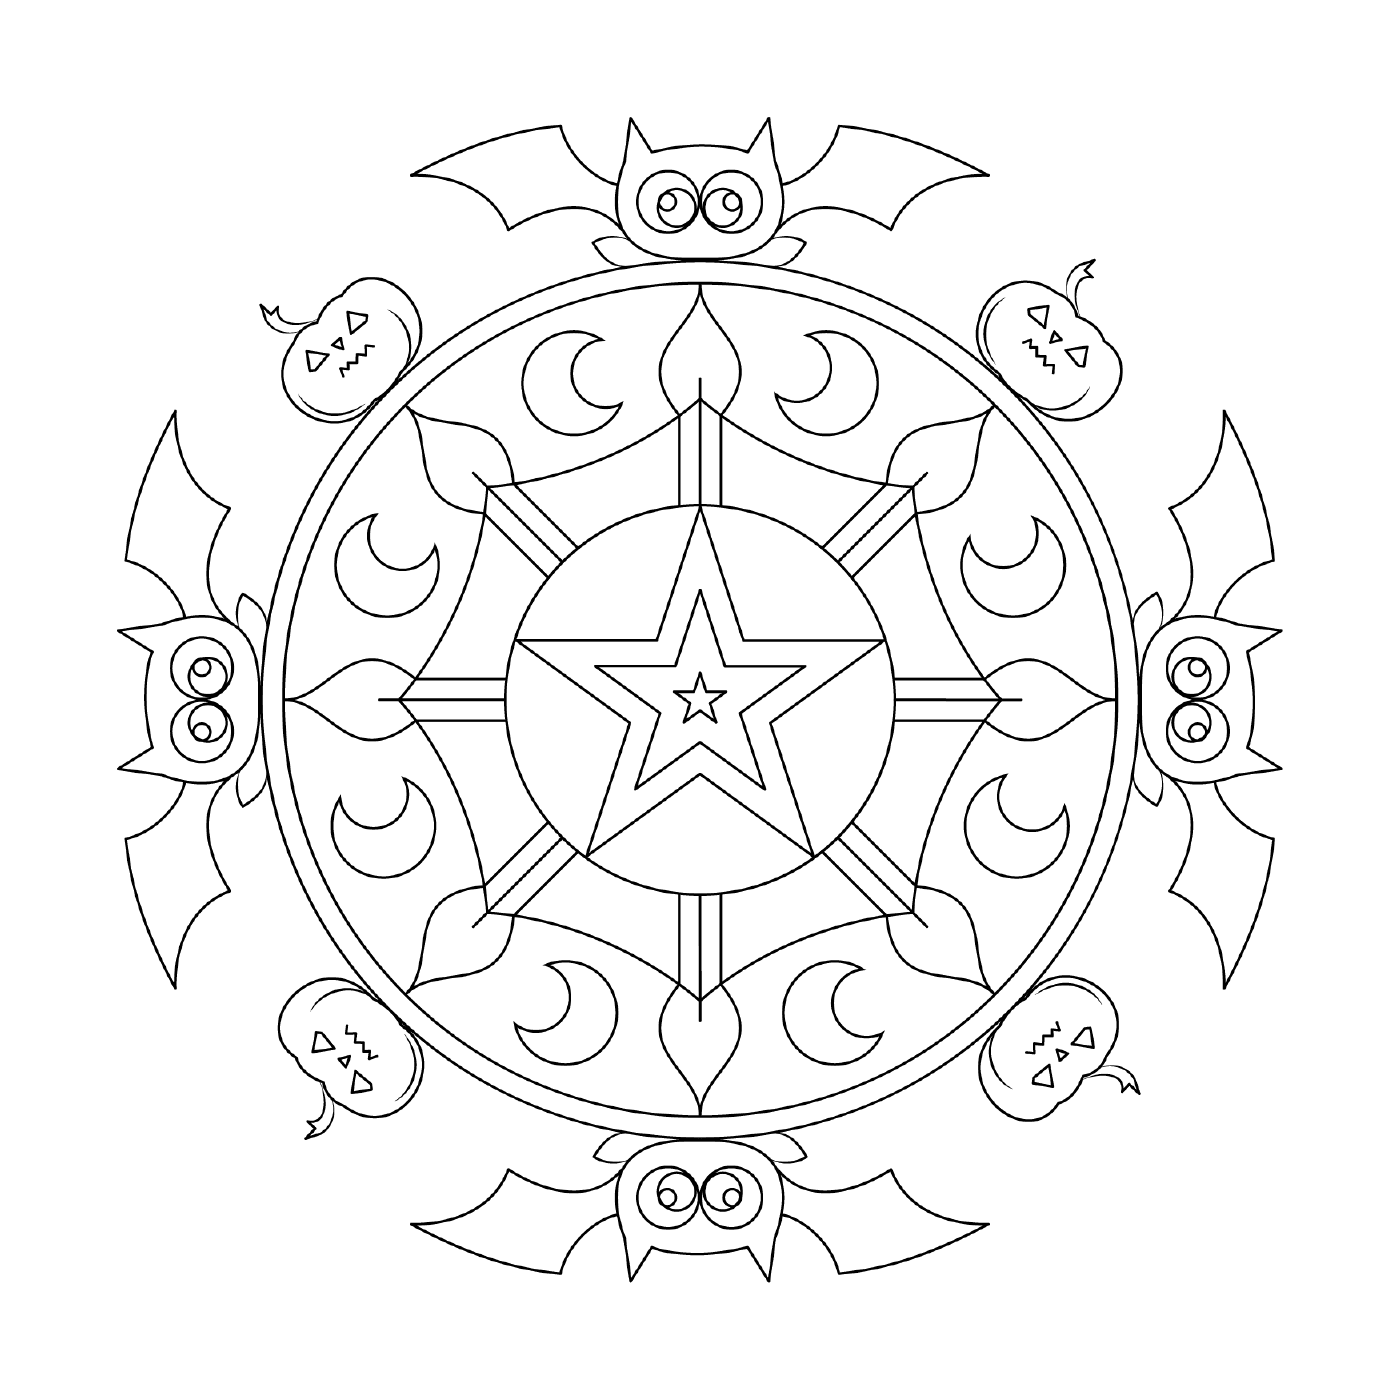  Mandala with bats and star 